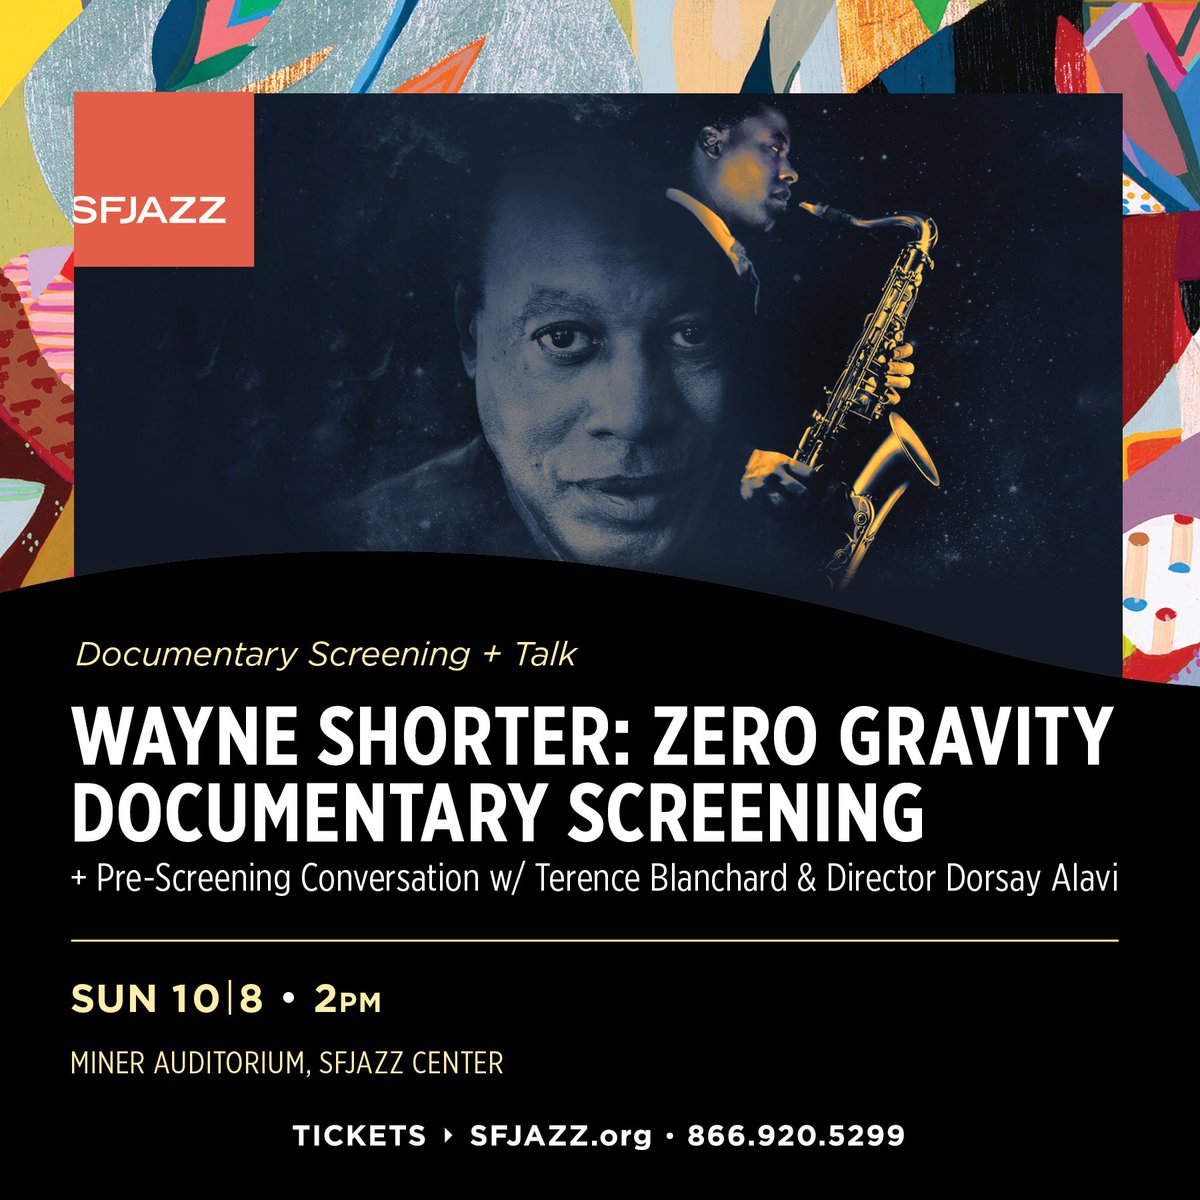 'Wayne Shorter: Zero Gravity' screening at @SFJAZZ this Sunday October 8th at 2 pm, with Q&A between @T_Blanchard & director Dorsay Alavi. sfjazz.org/tickets/produc…